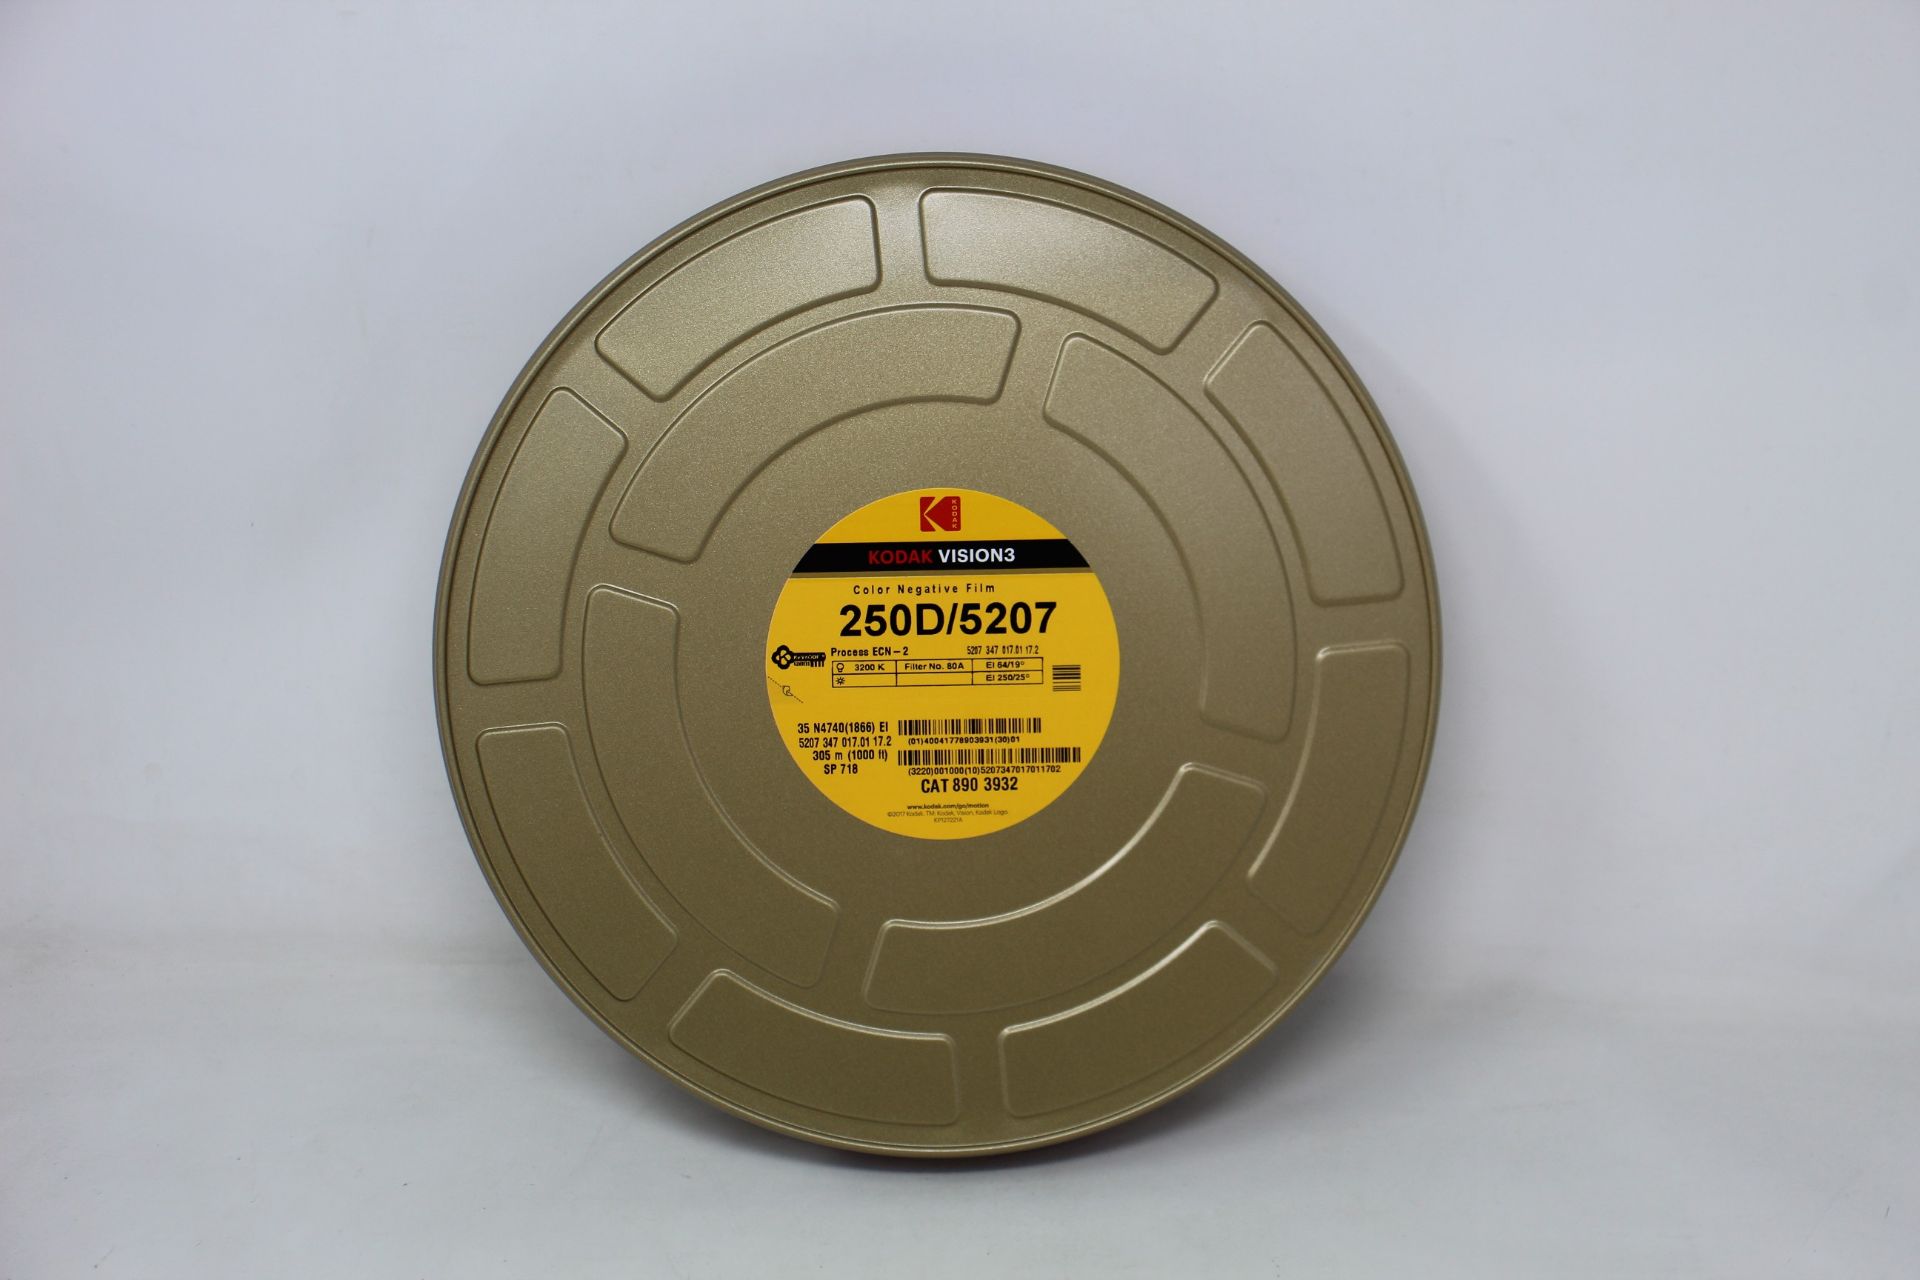 A reel of as new Kodak Vision3 250D/5207 1000ft (305m) Colour Negative Film.